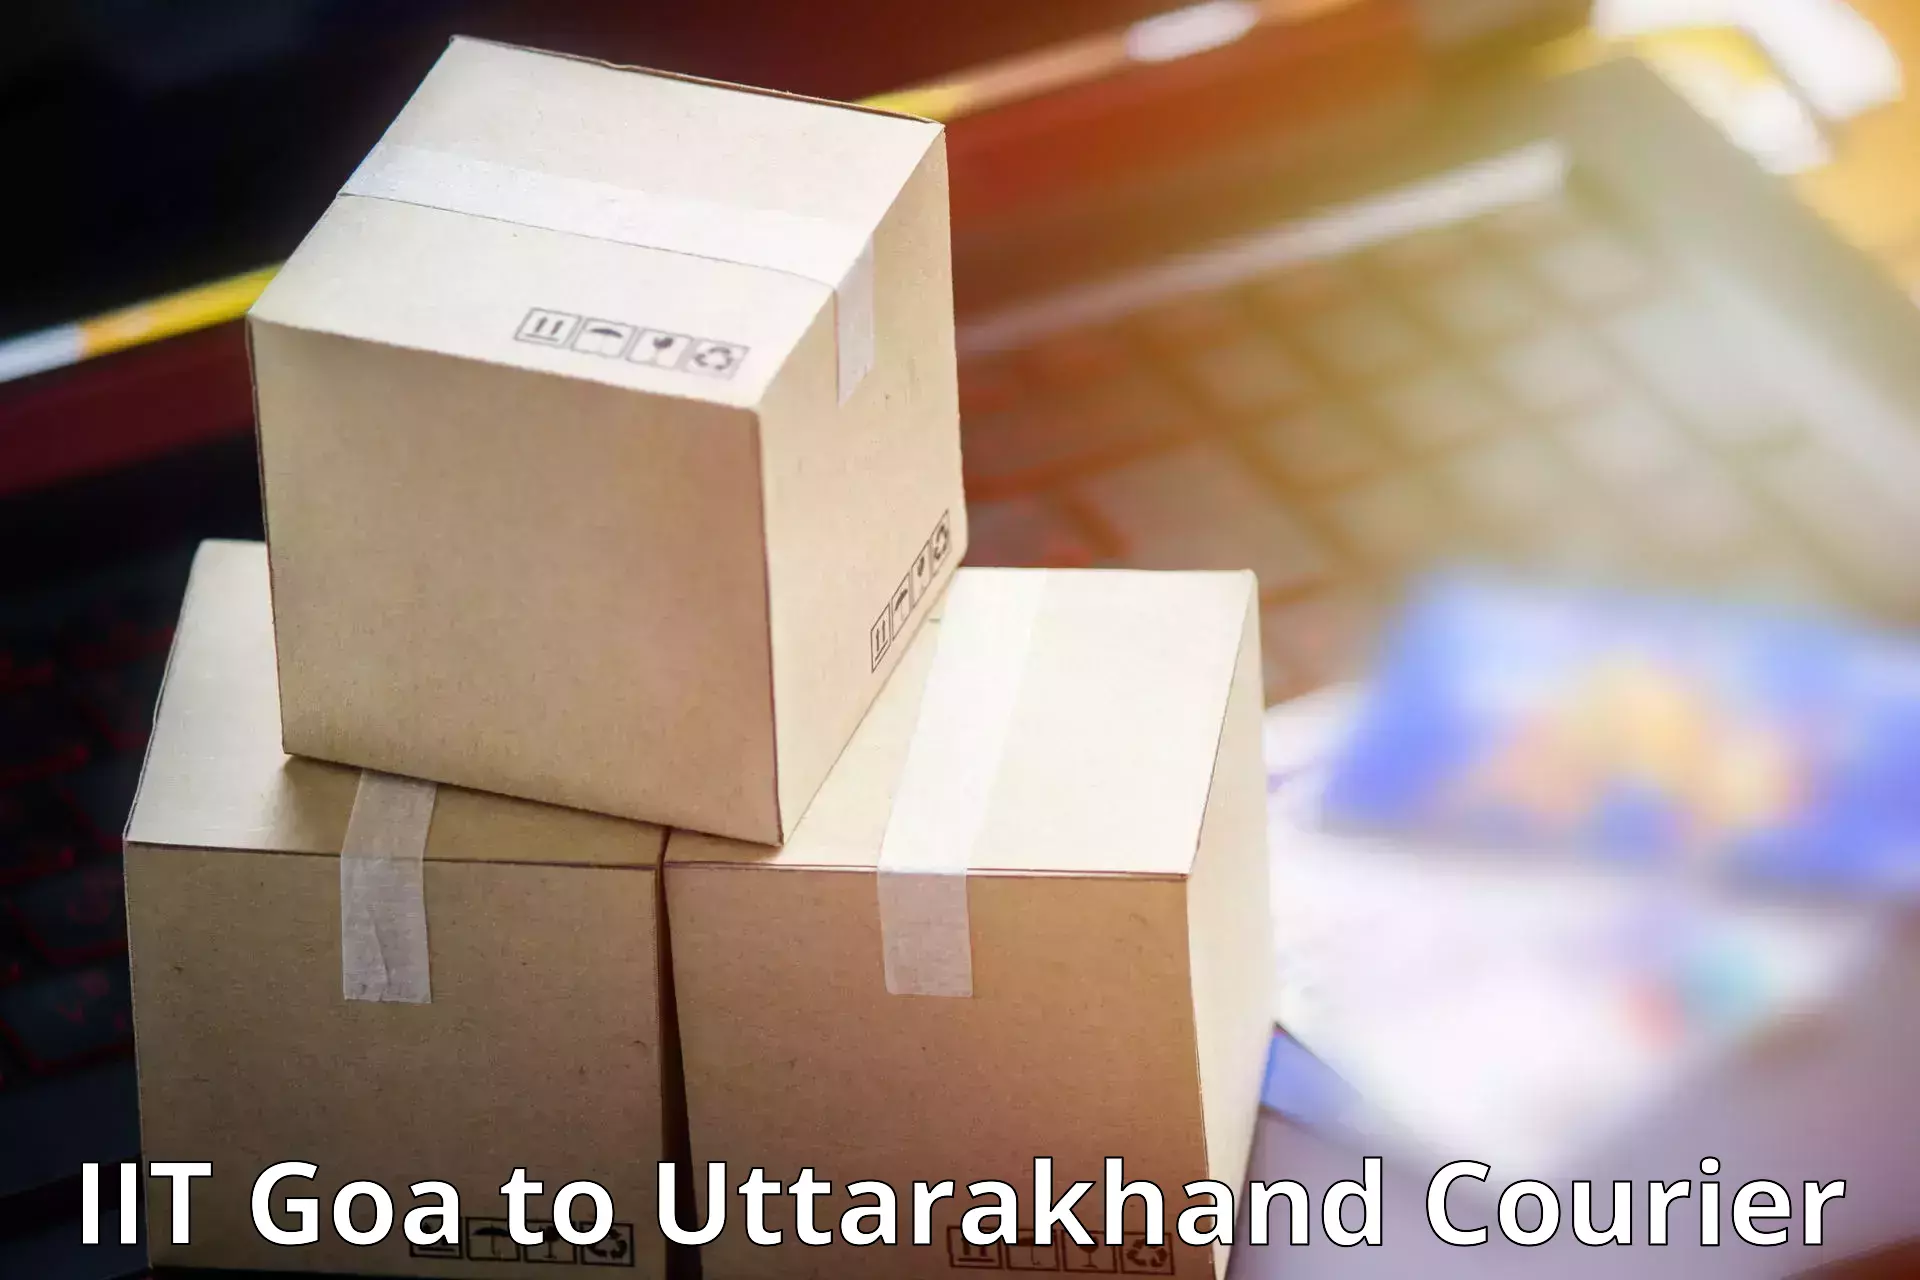 Efficient parcel service IIT Goa to Dehradun